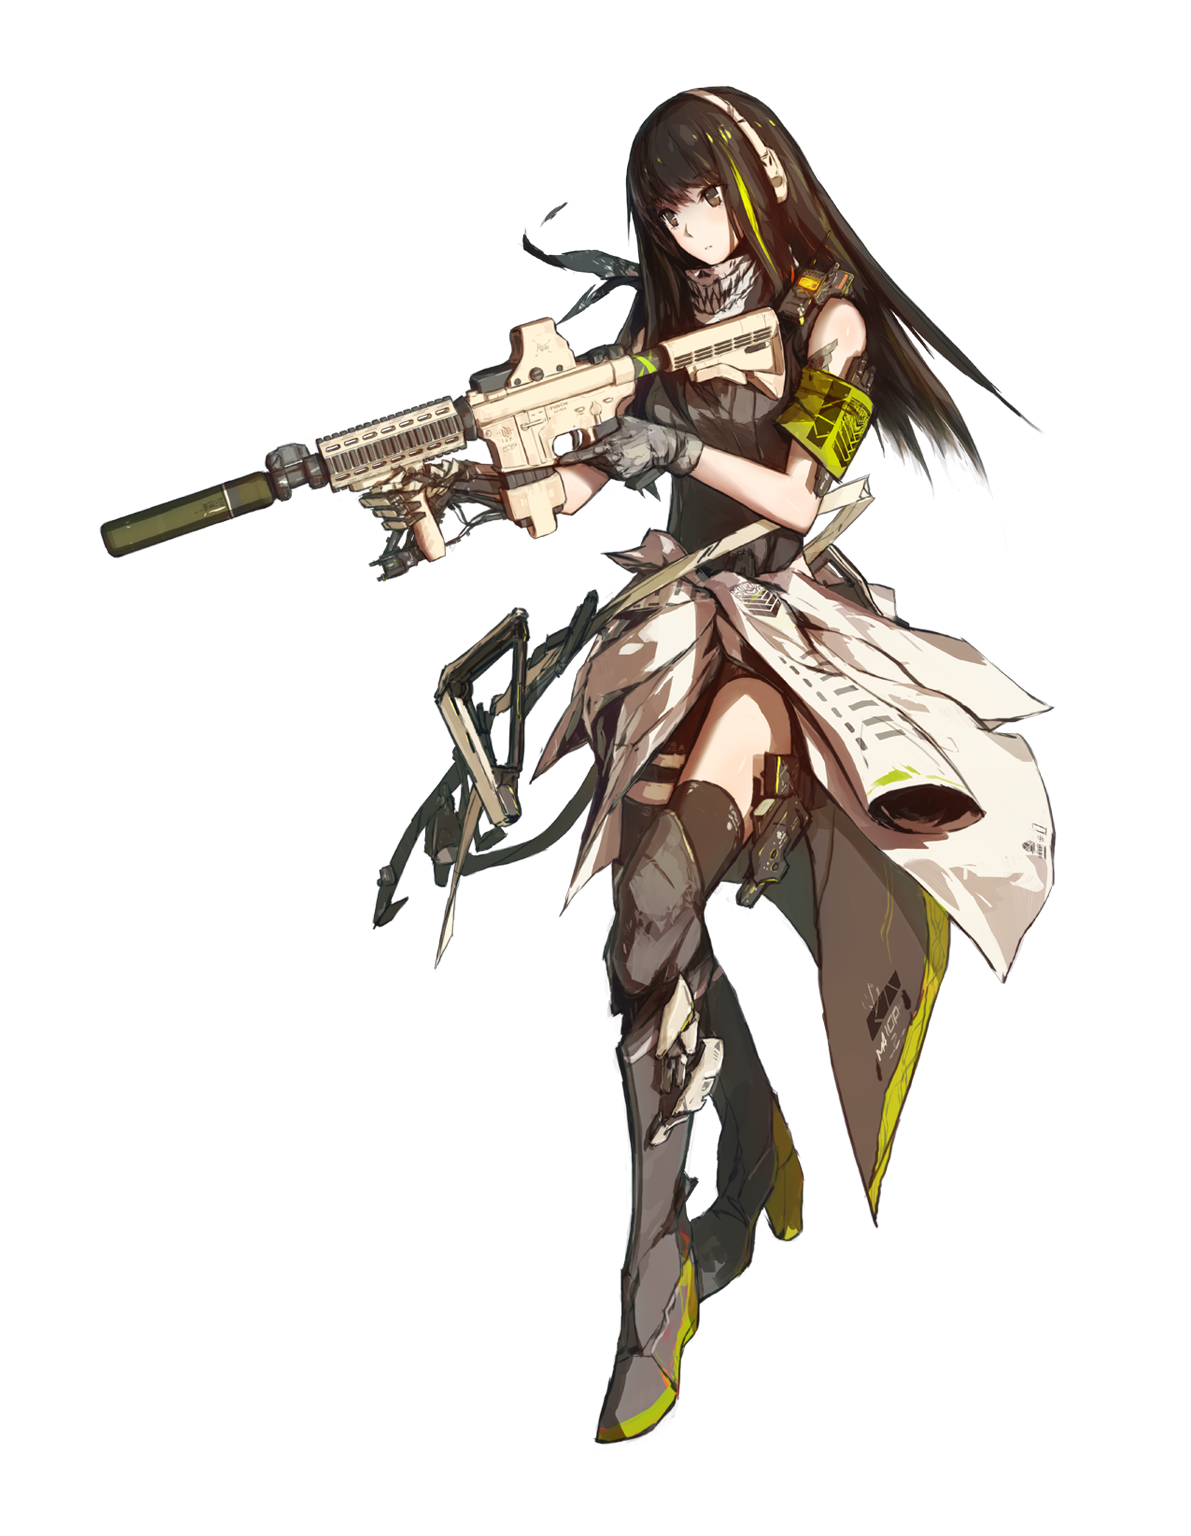 M4A1卡賓槍(手遊《少女前線》中登場的角色)